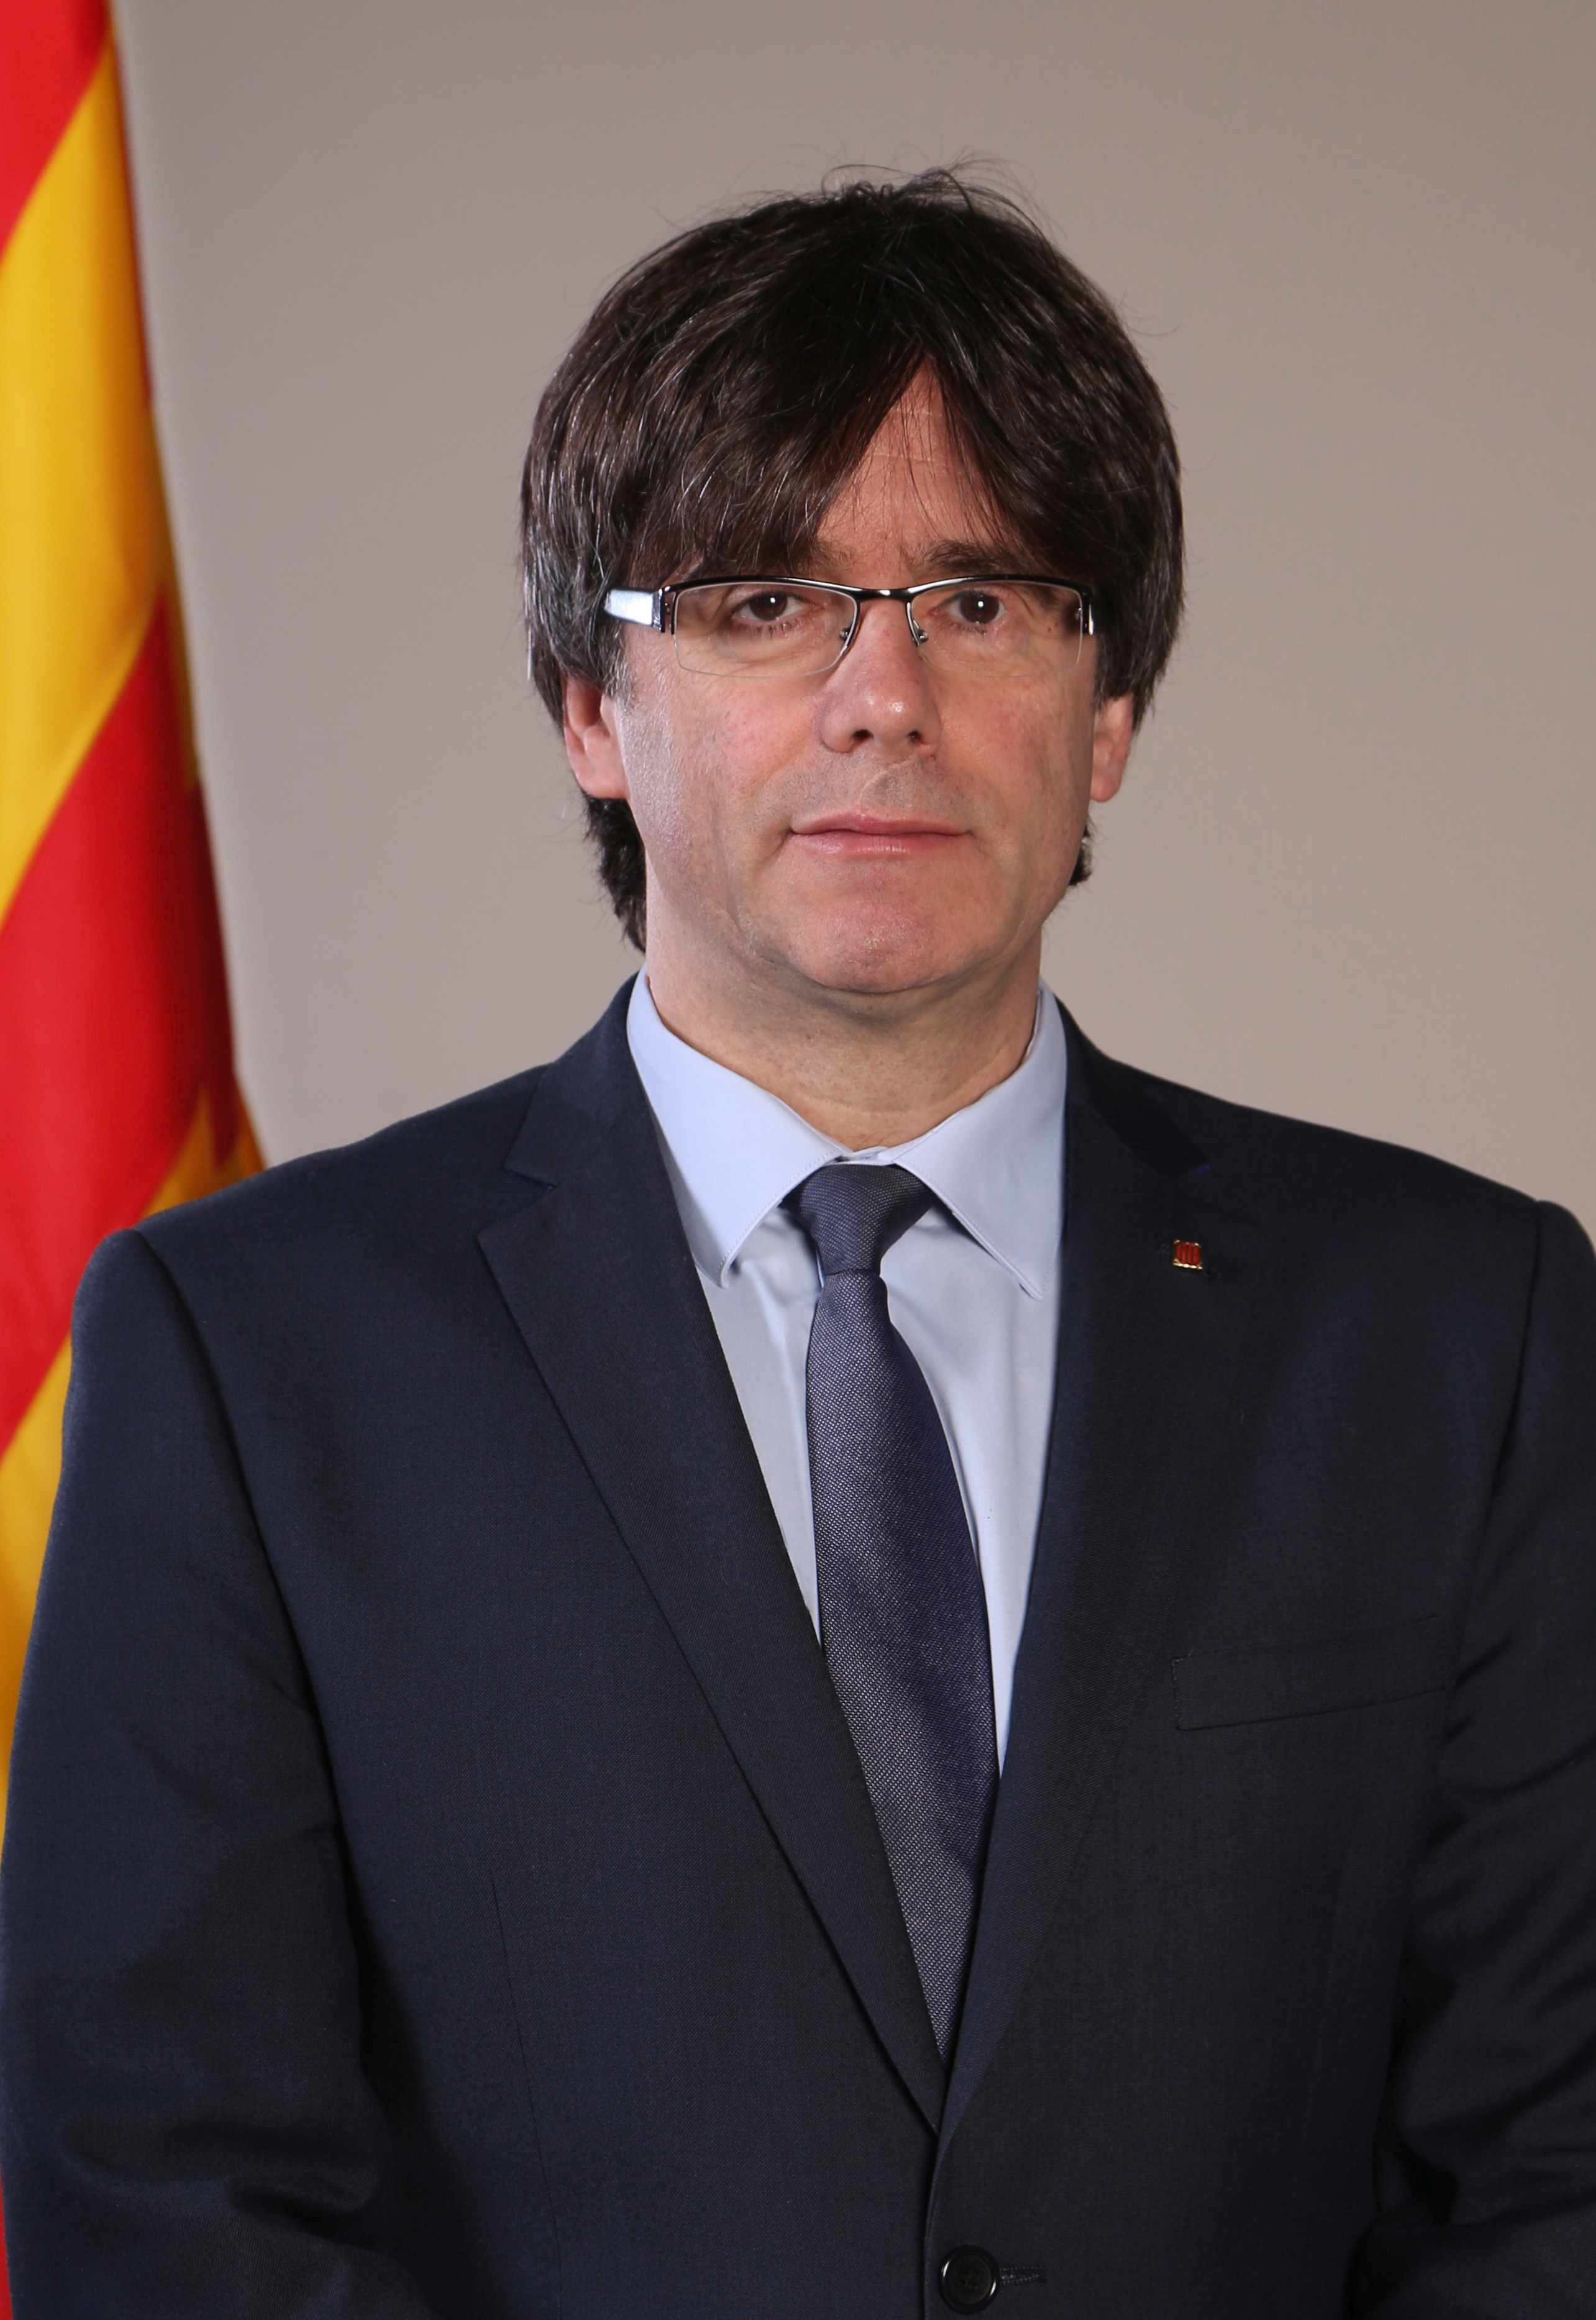 Retrat_oficial_del_President_Carles_Puigdemont_cropped.jpg